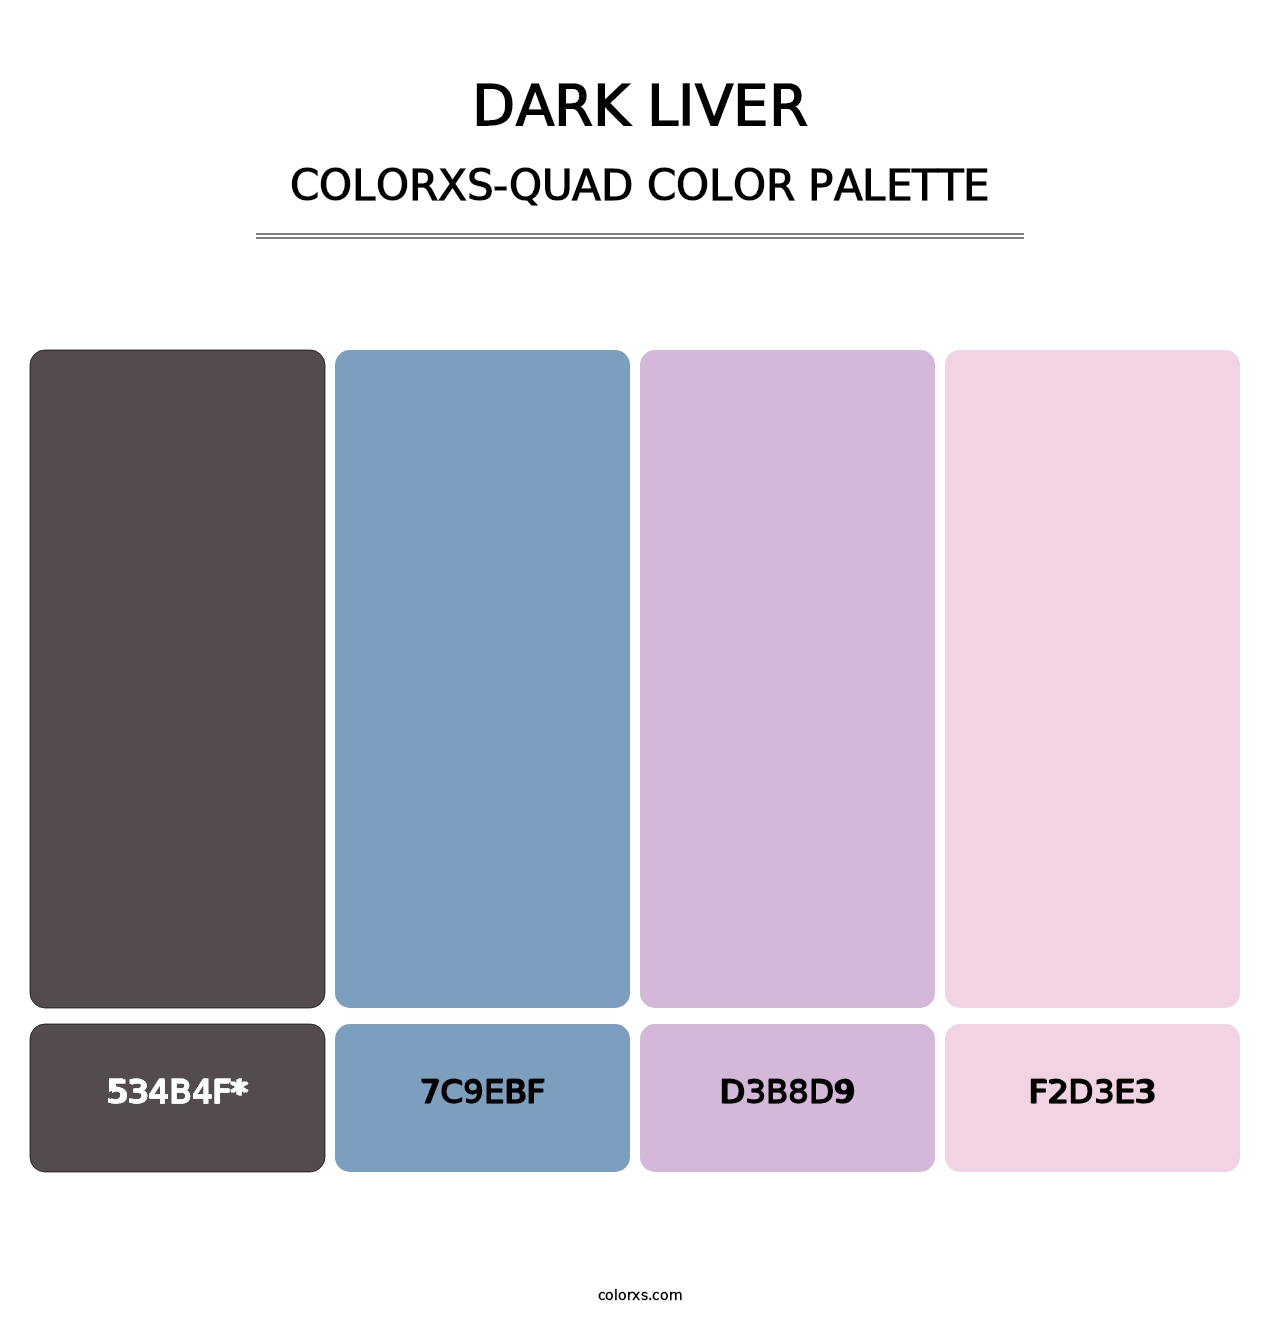 Dark Liver - Colorxs Quad Palette